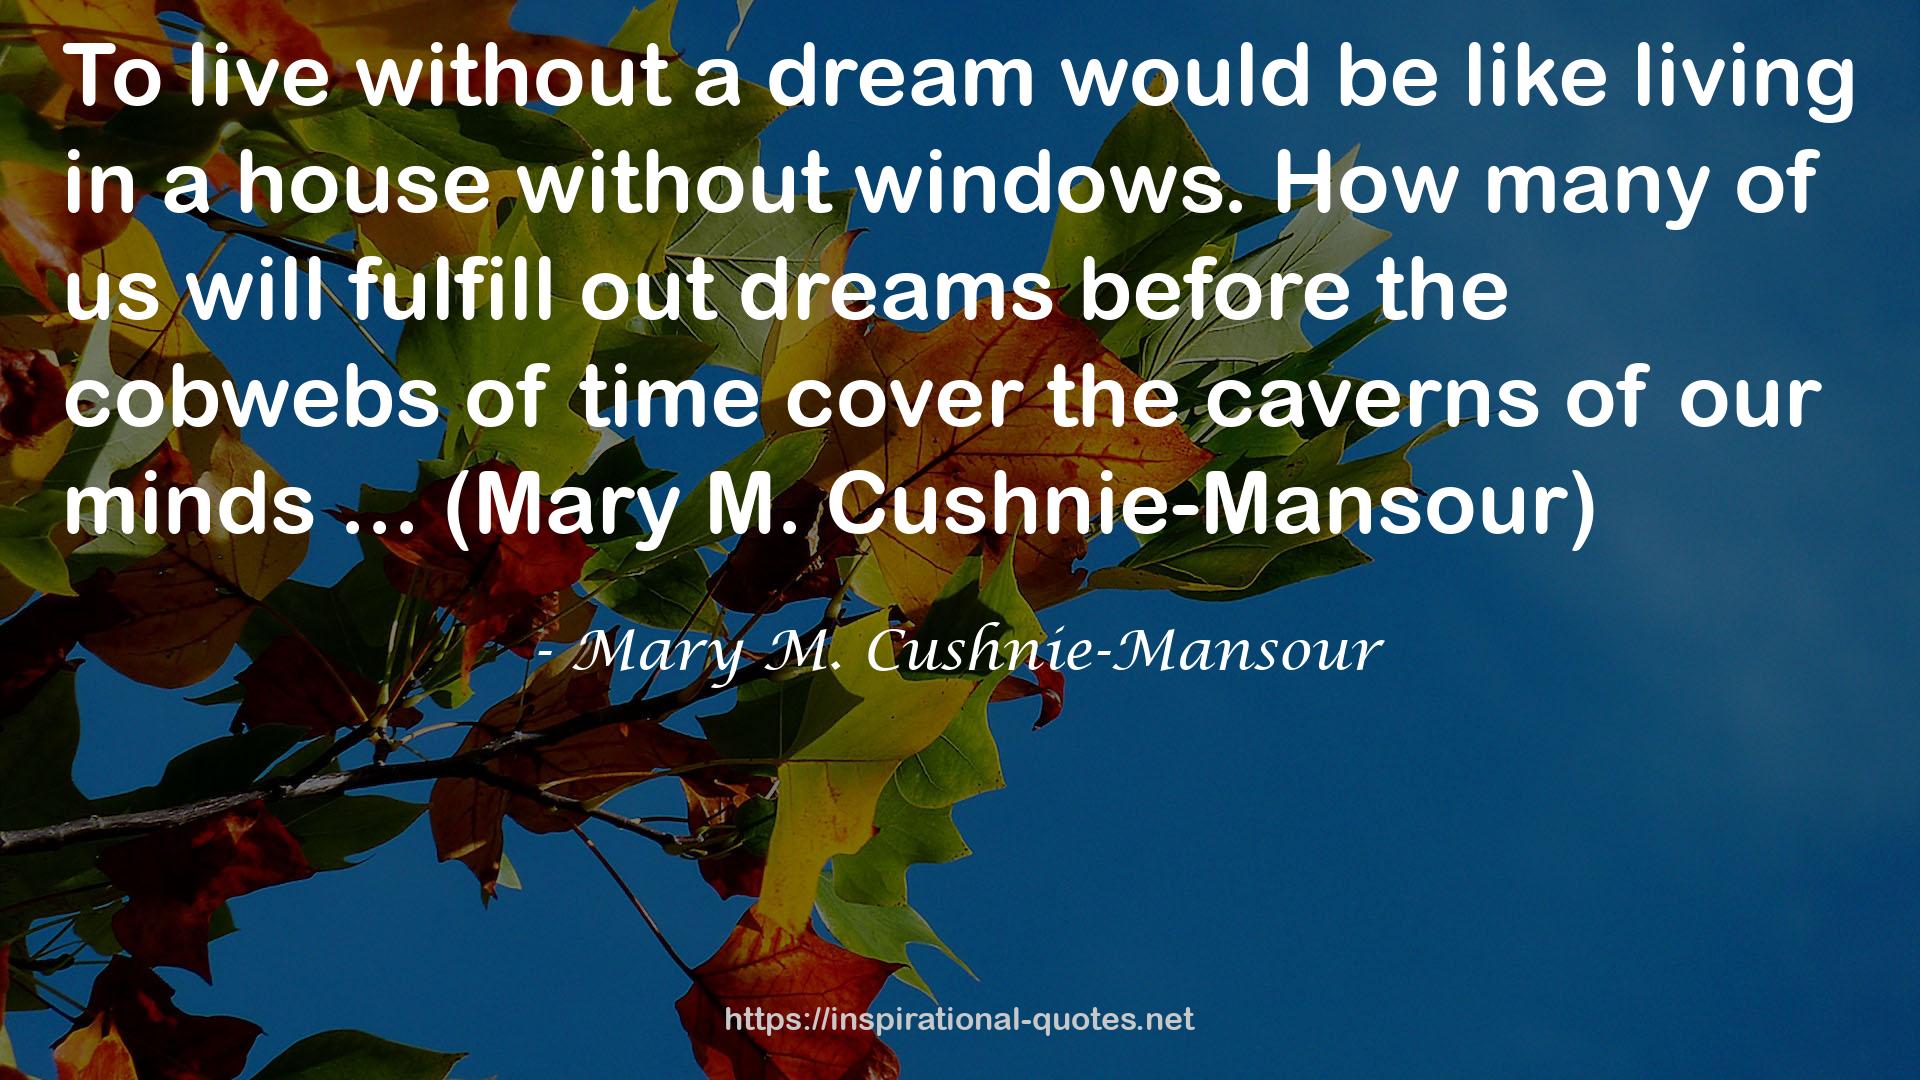 Mary M. Cushnie-Mansour QUOTES